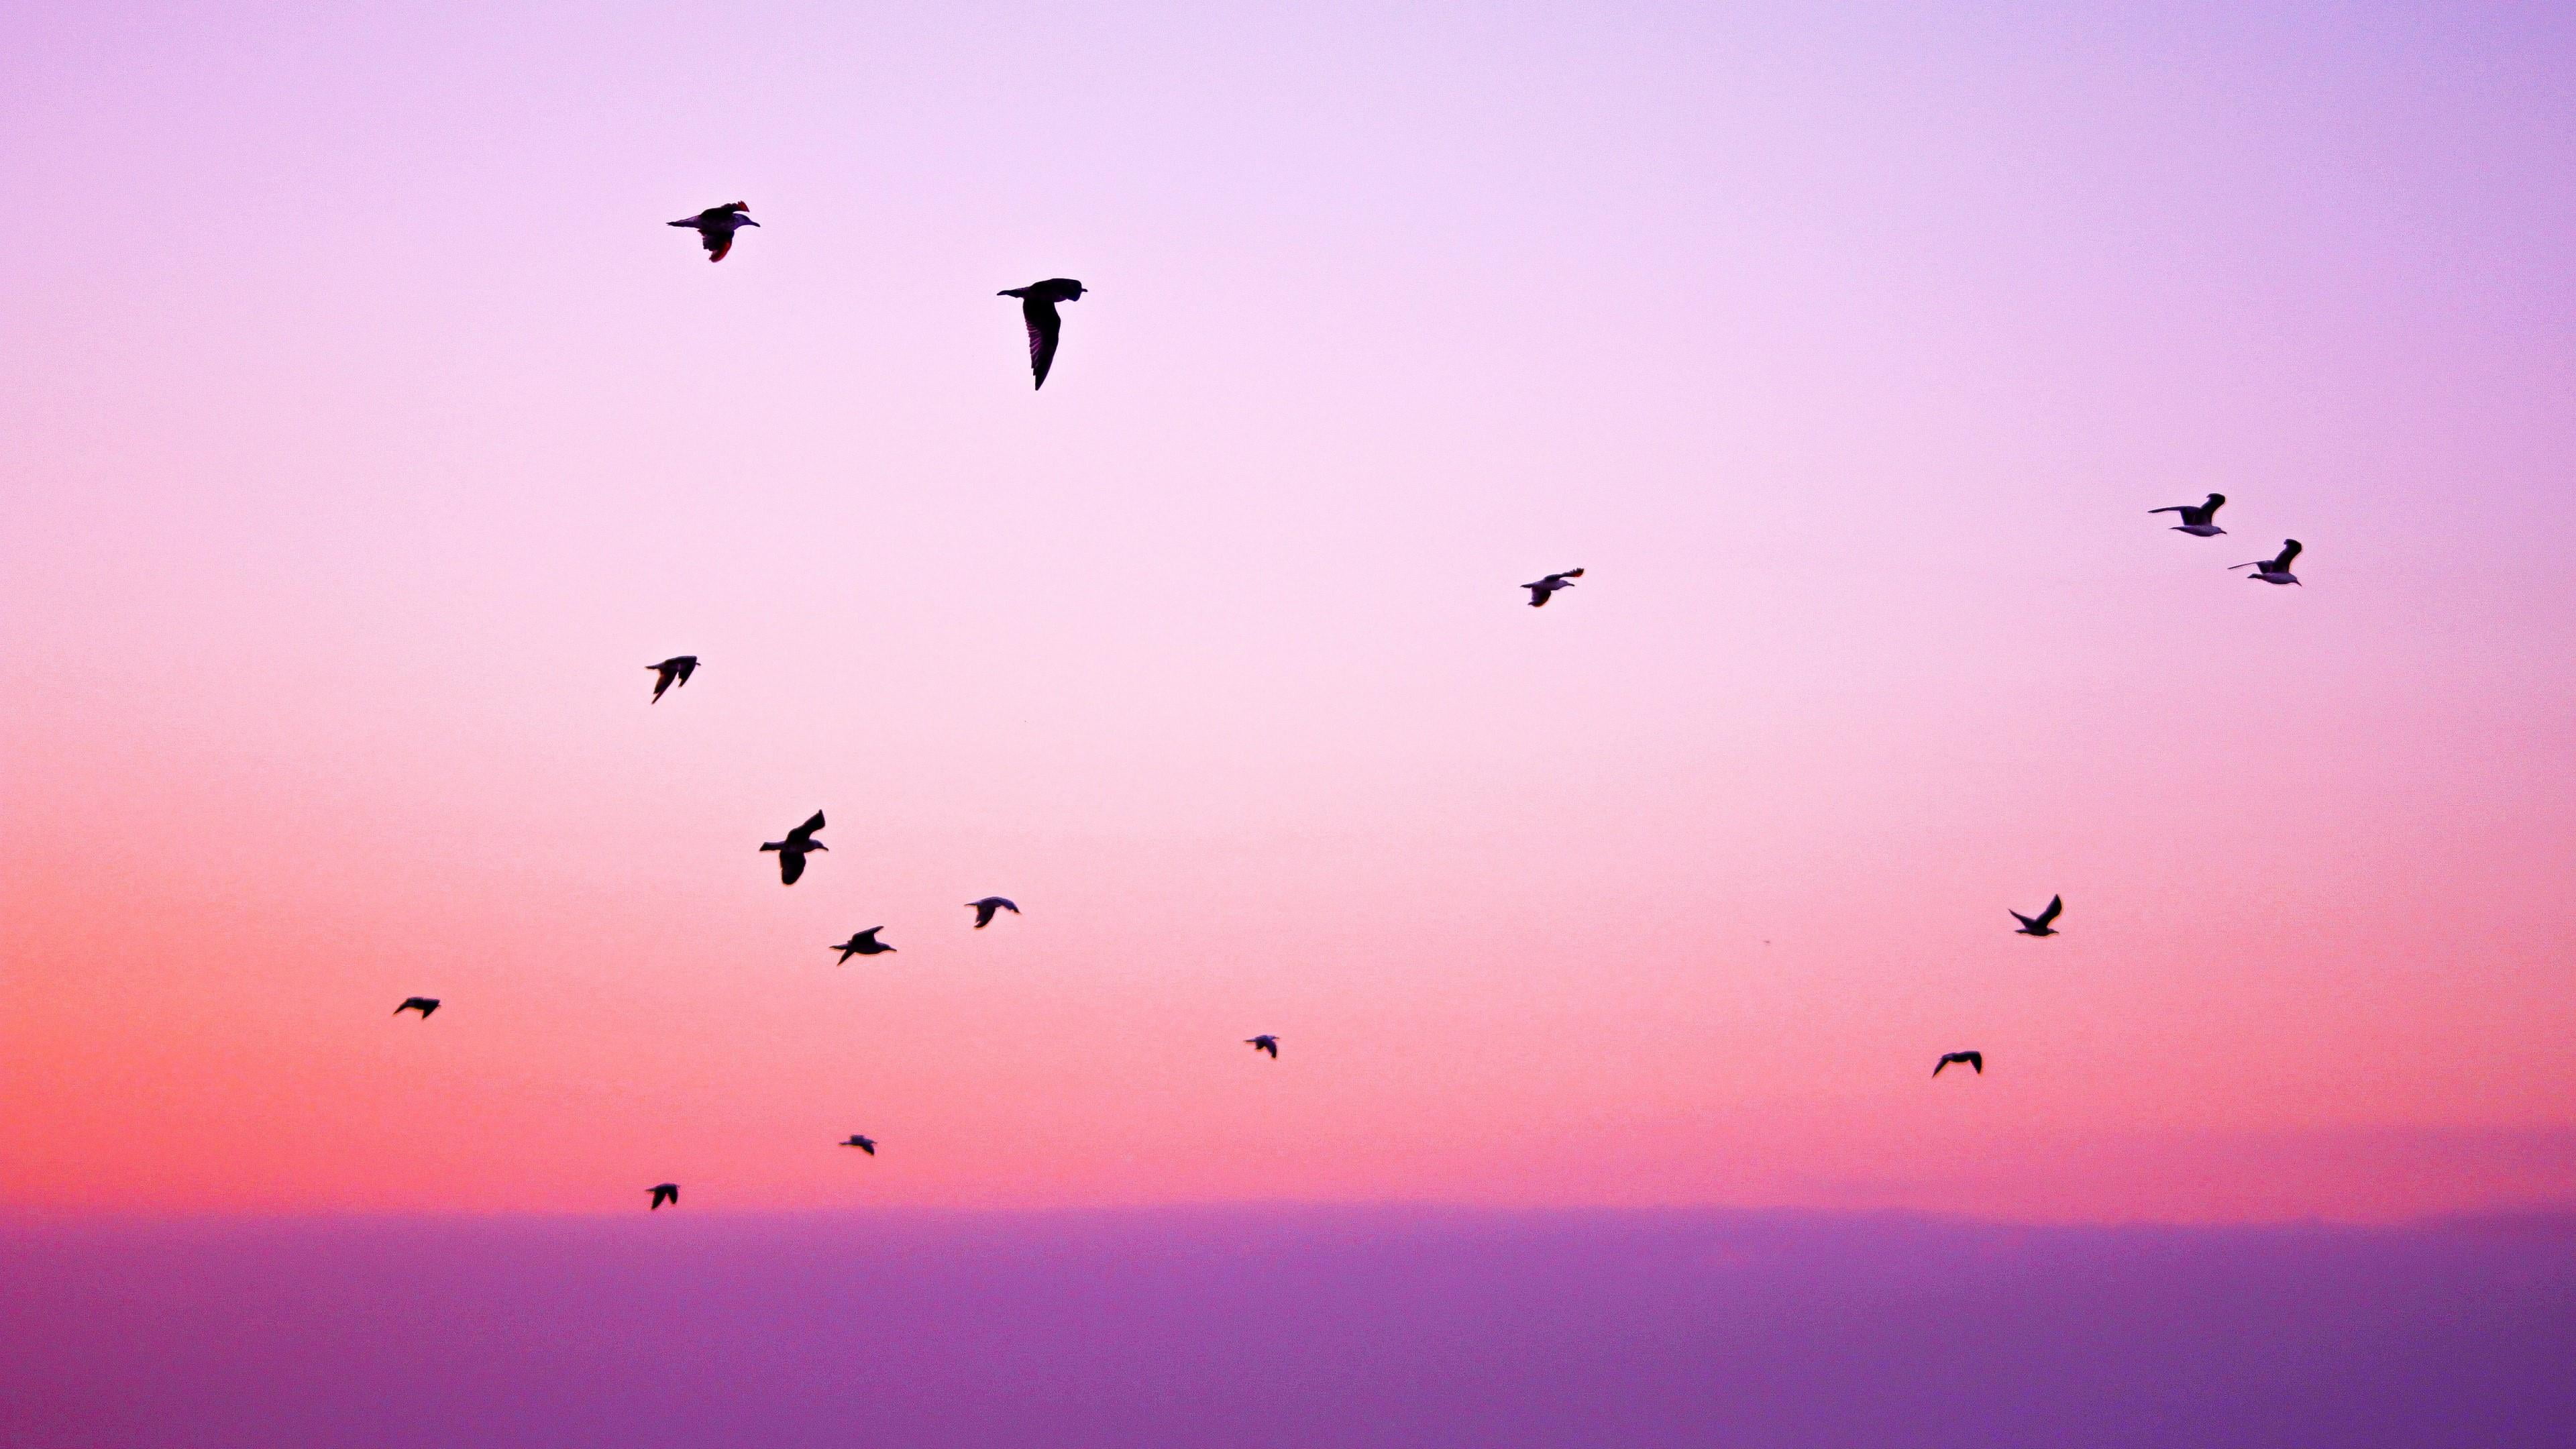 sky, purple sky, migration, bird, morning, bird migration, sunrise